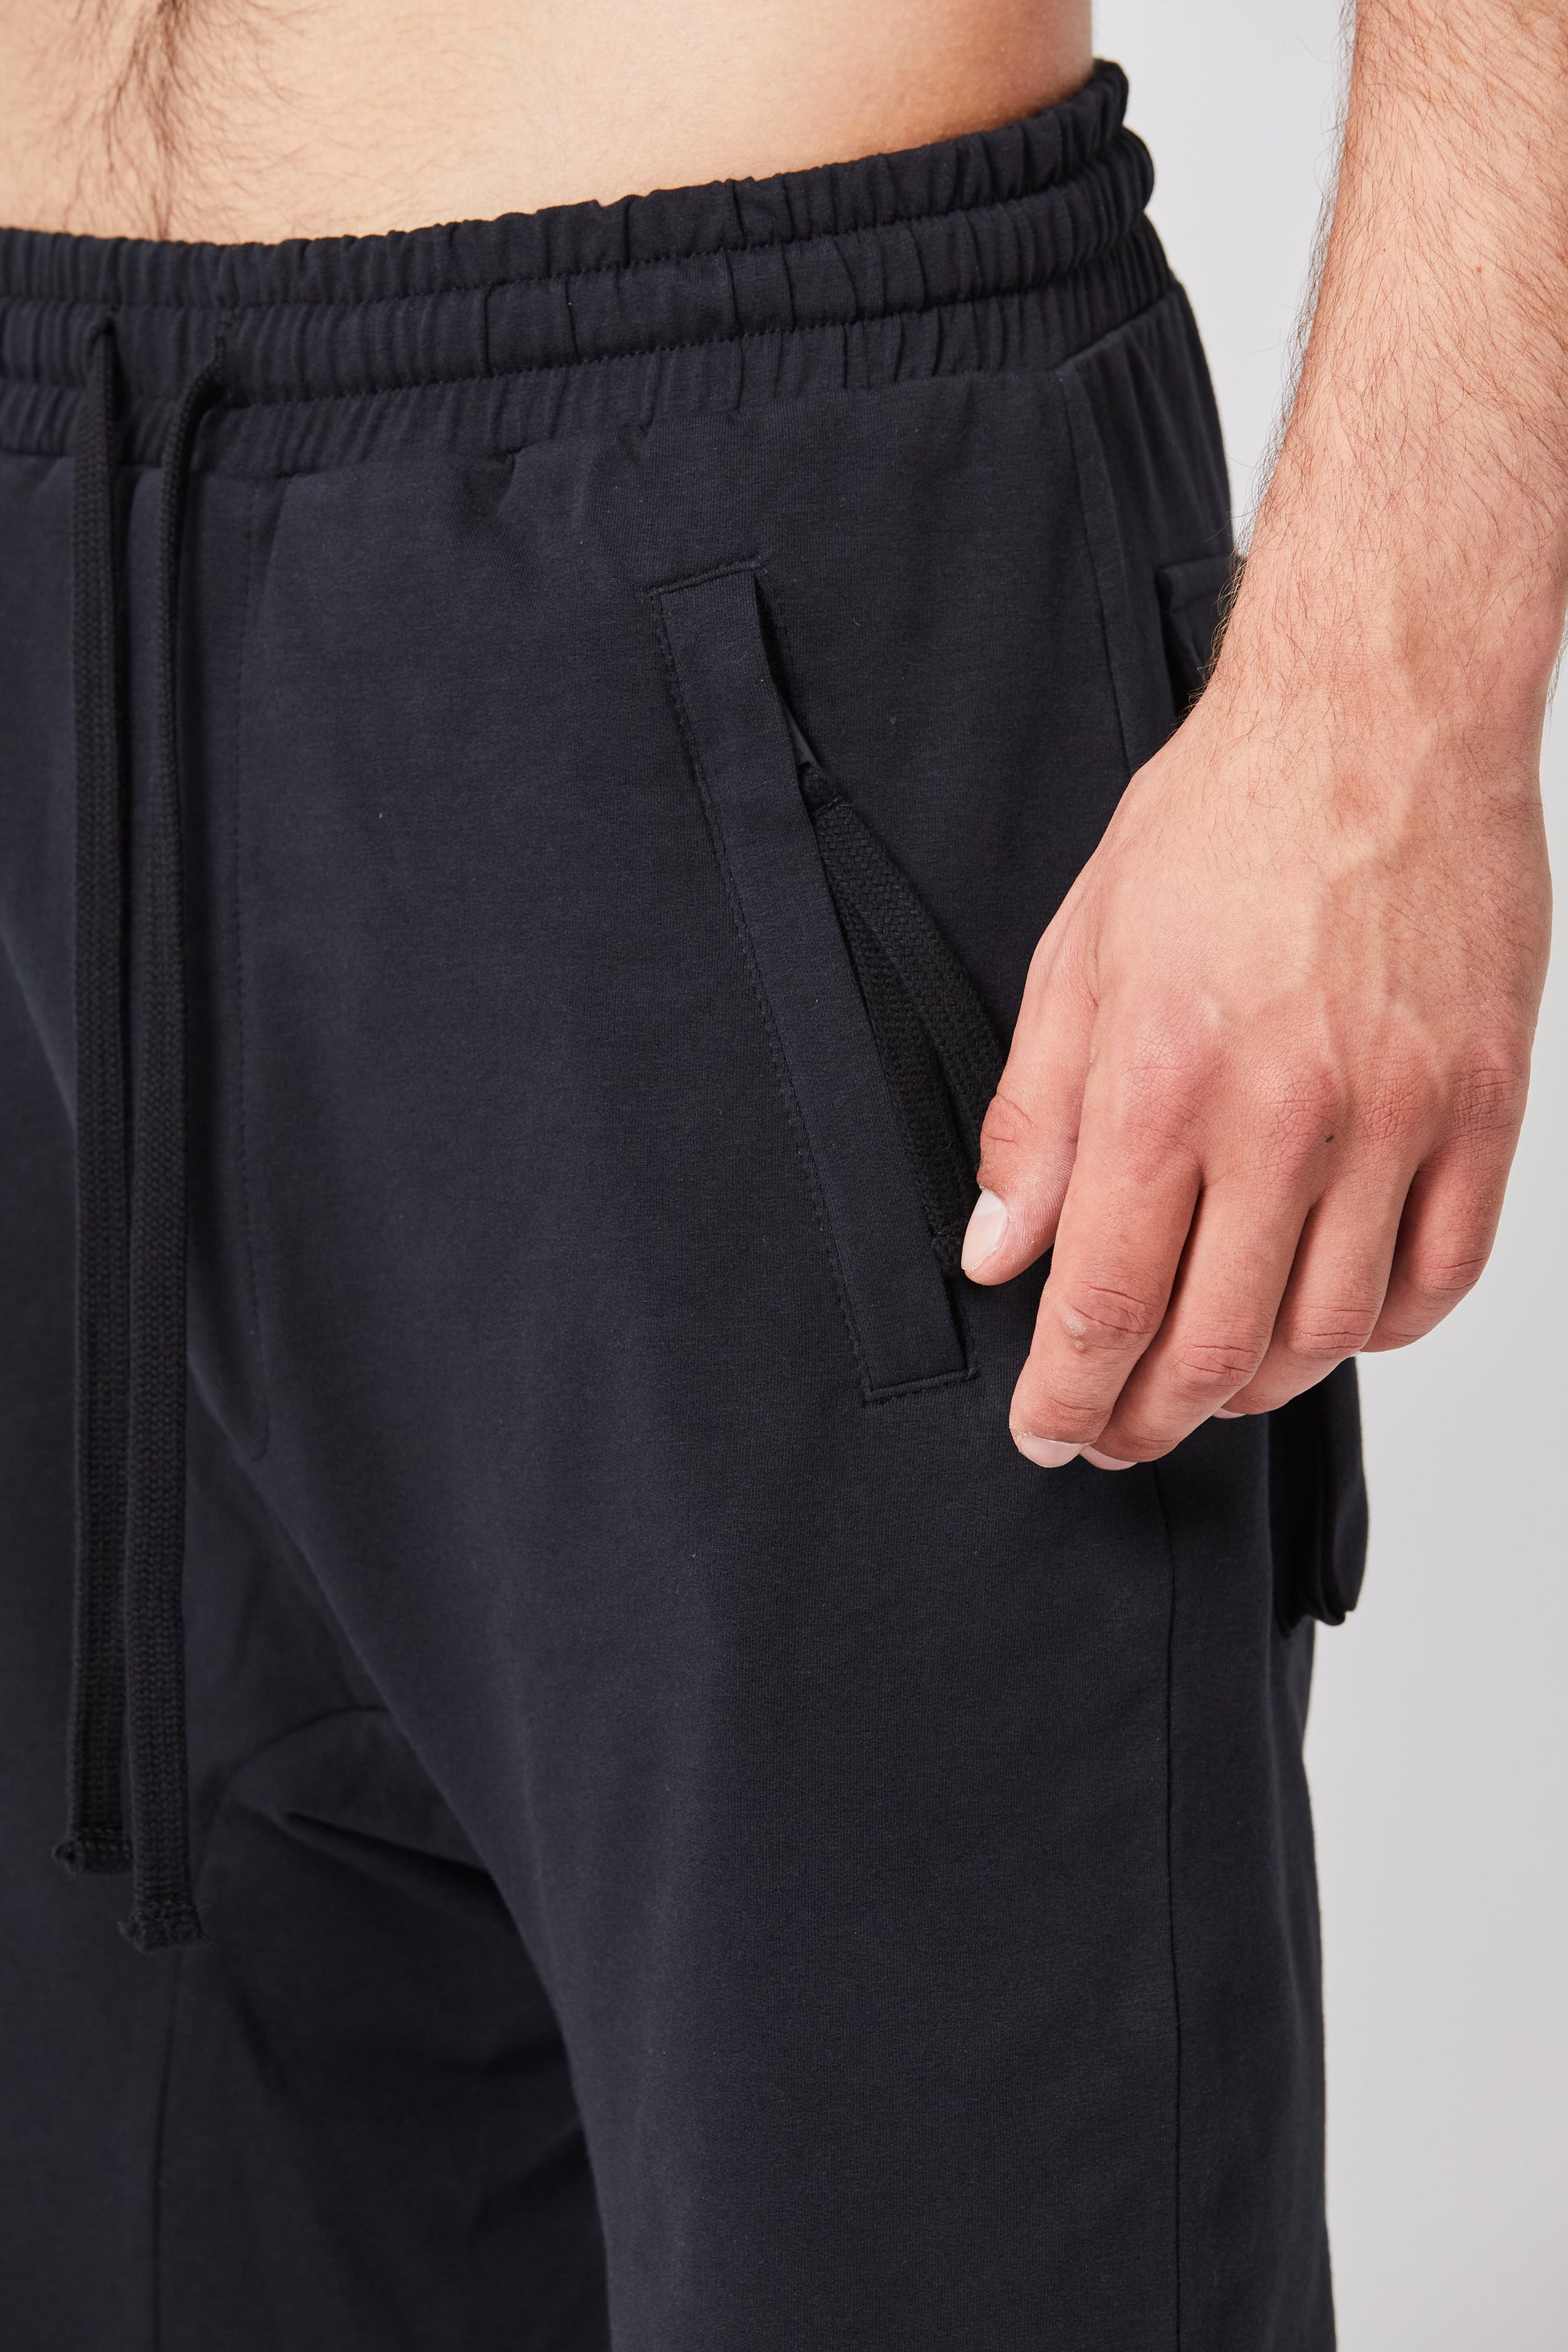 MST – Modal Black The Cotton Shorts Drop Stretch 379 Archive Crotch